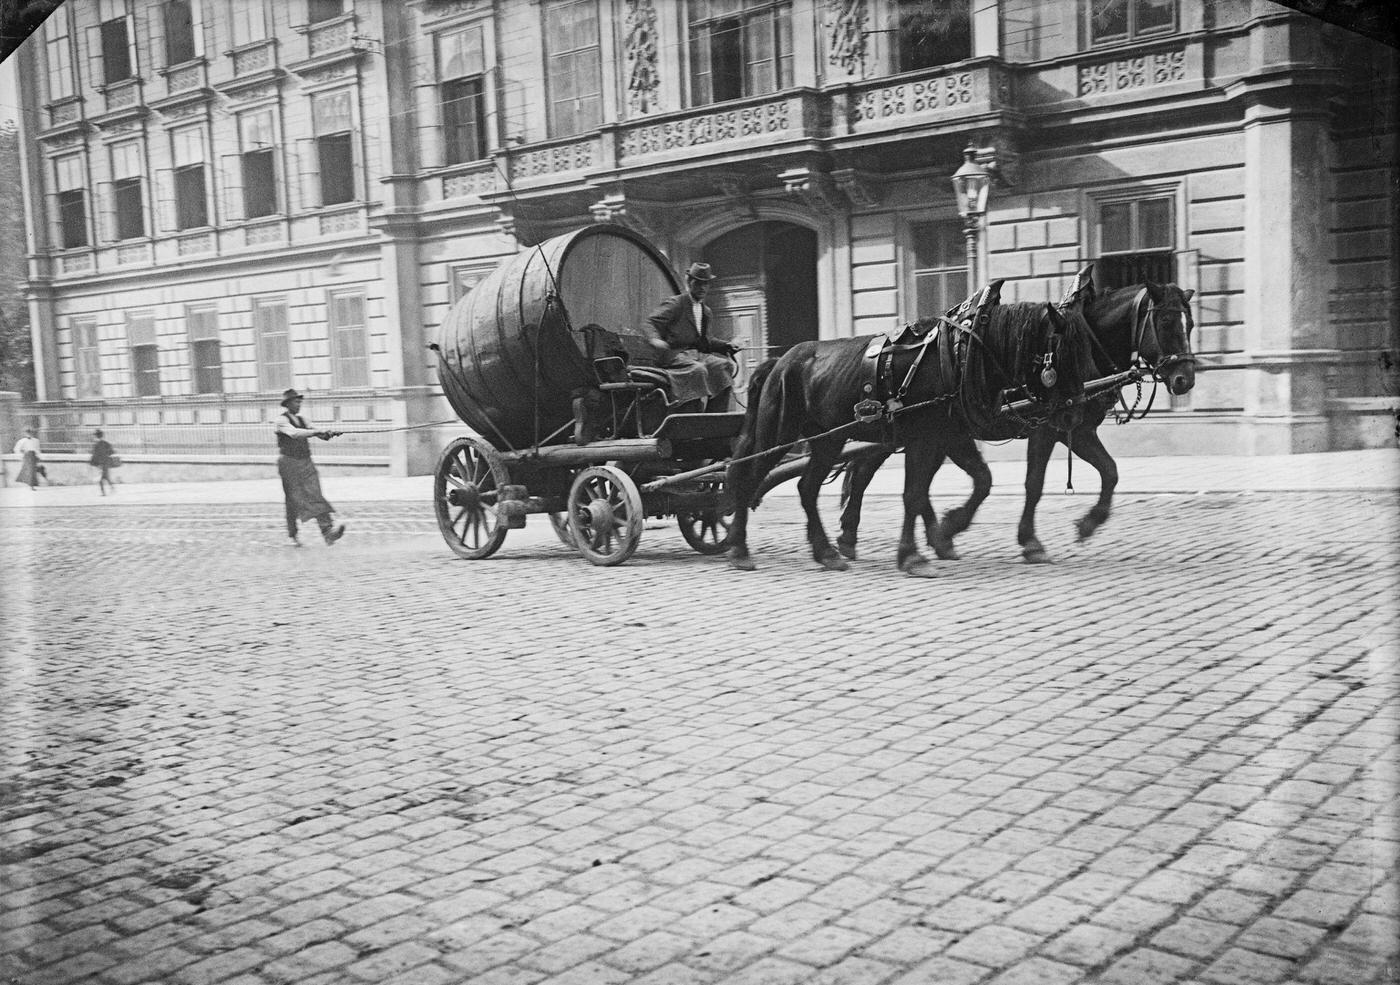 A coach for street cleaning in front of the k.u.k. Technisches Militärkomitee, Getreidemarkt 9, Institute for Technical Chemistry of the Vienna University of Technology today, Vienna, 1900s